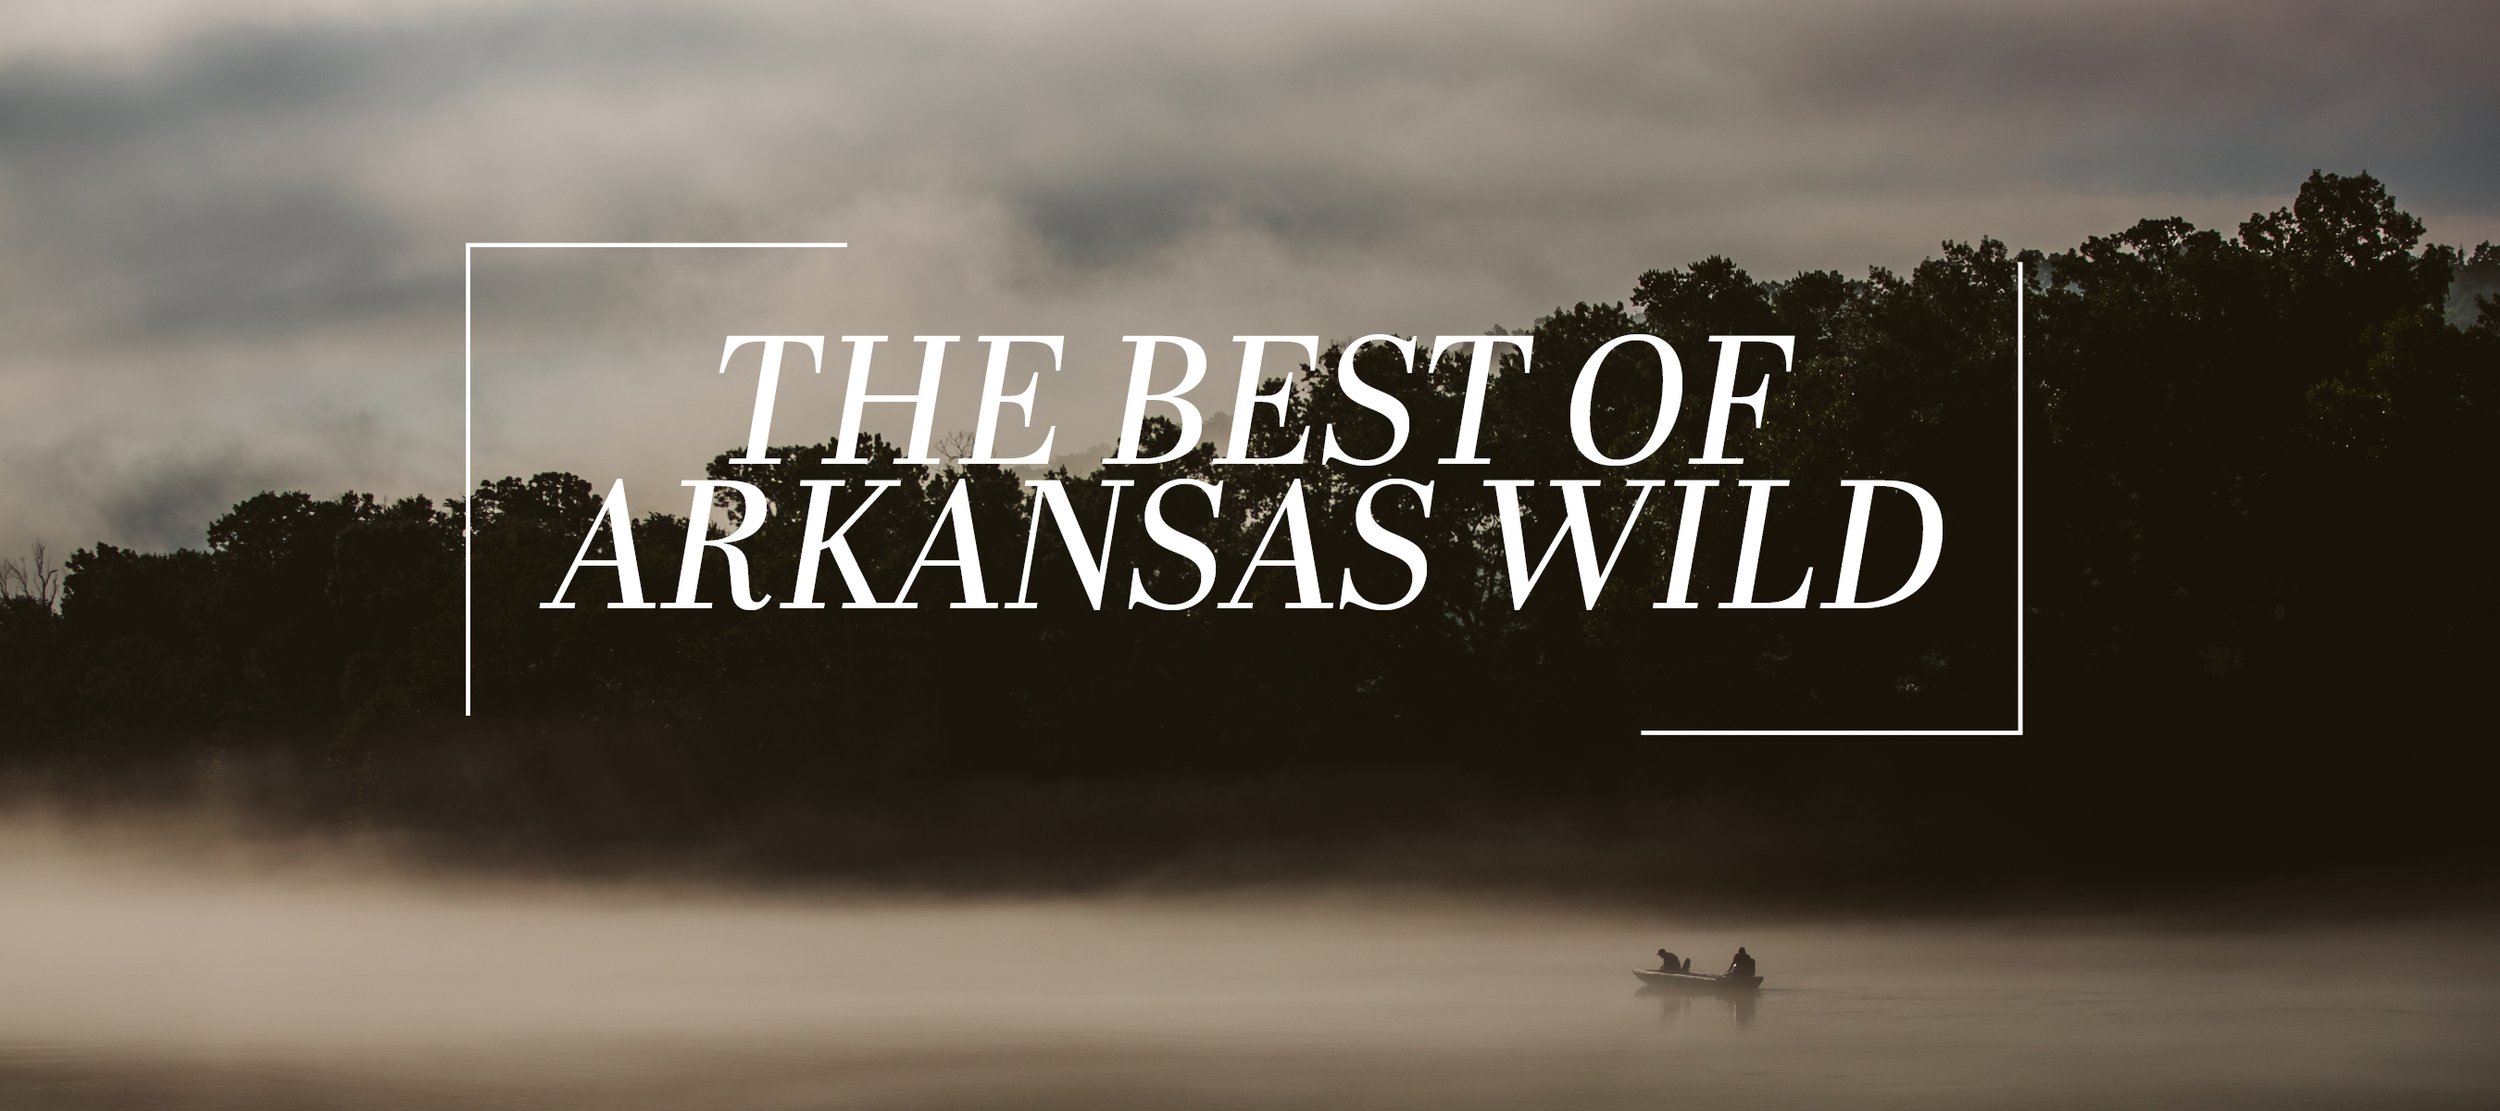 Best of Arkansas Wild.jpg